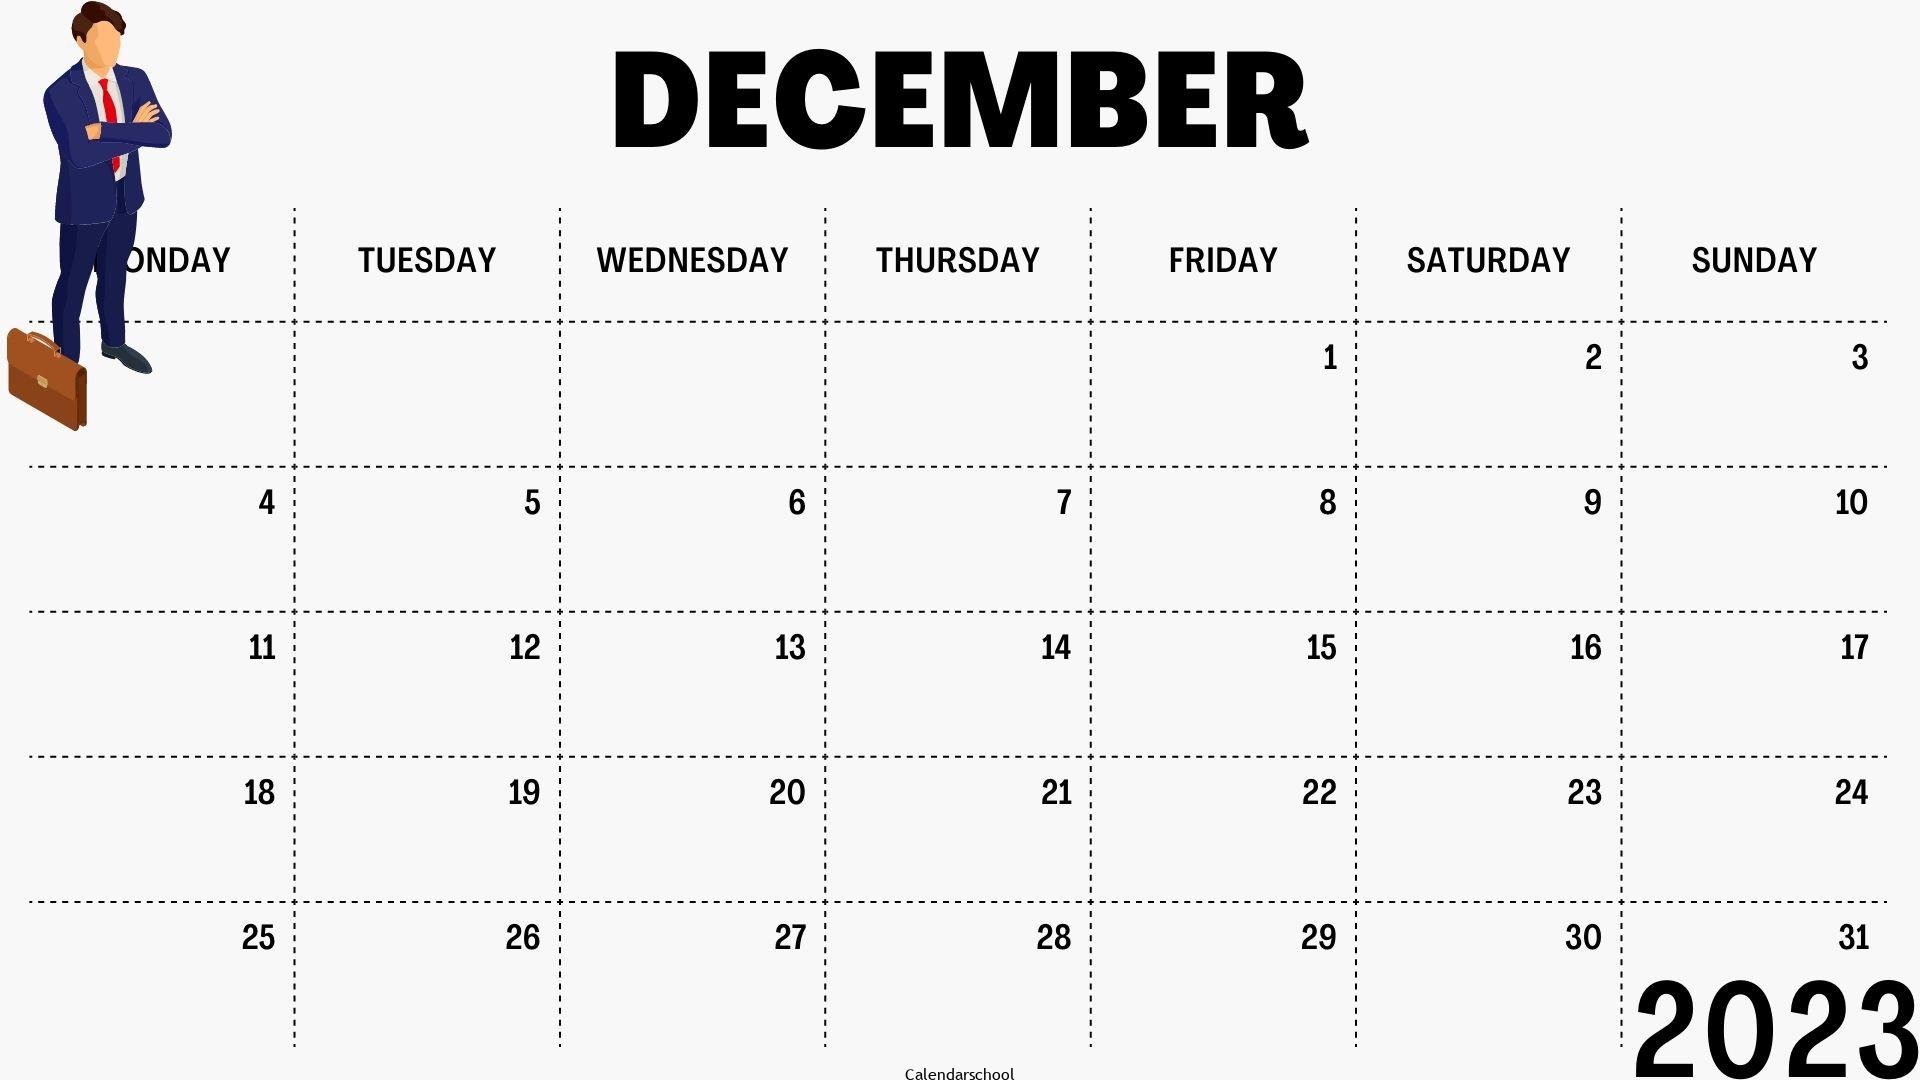 Calendar 2023 December With Festivals